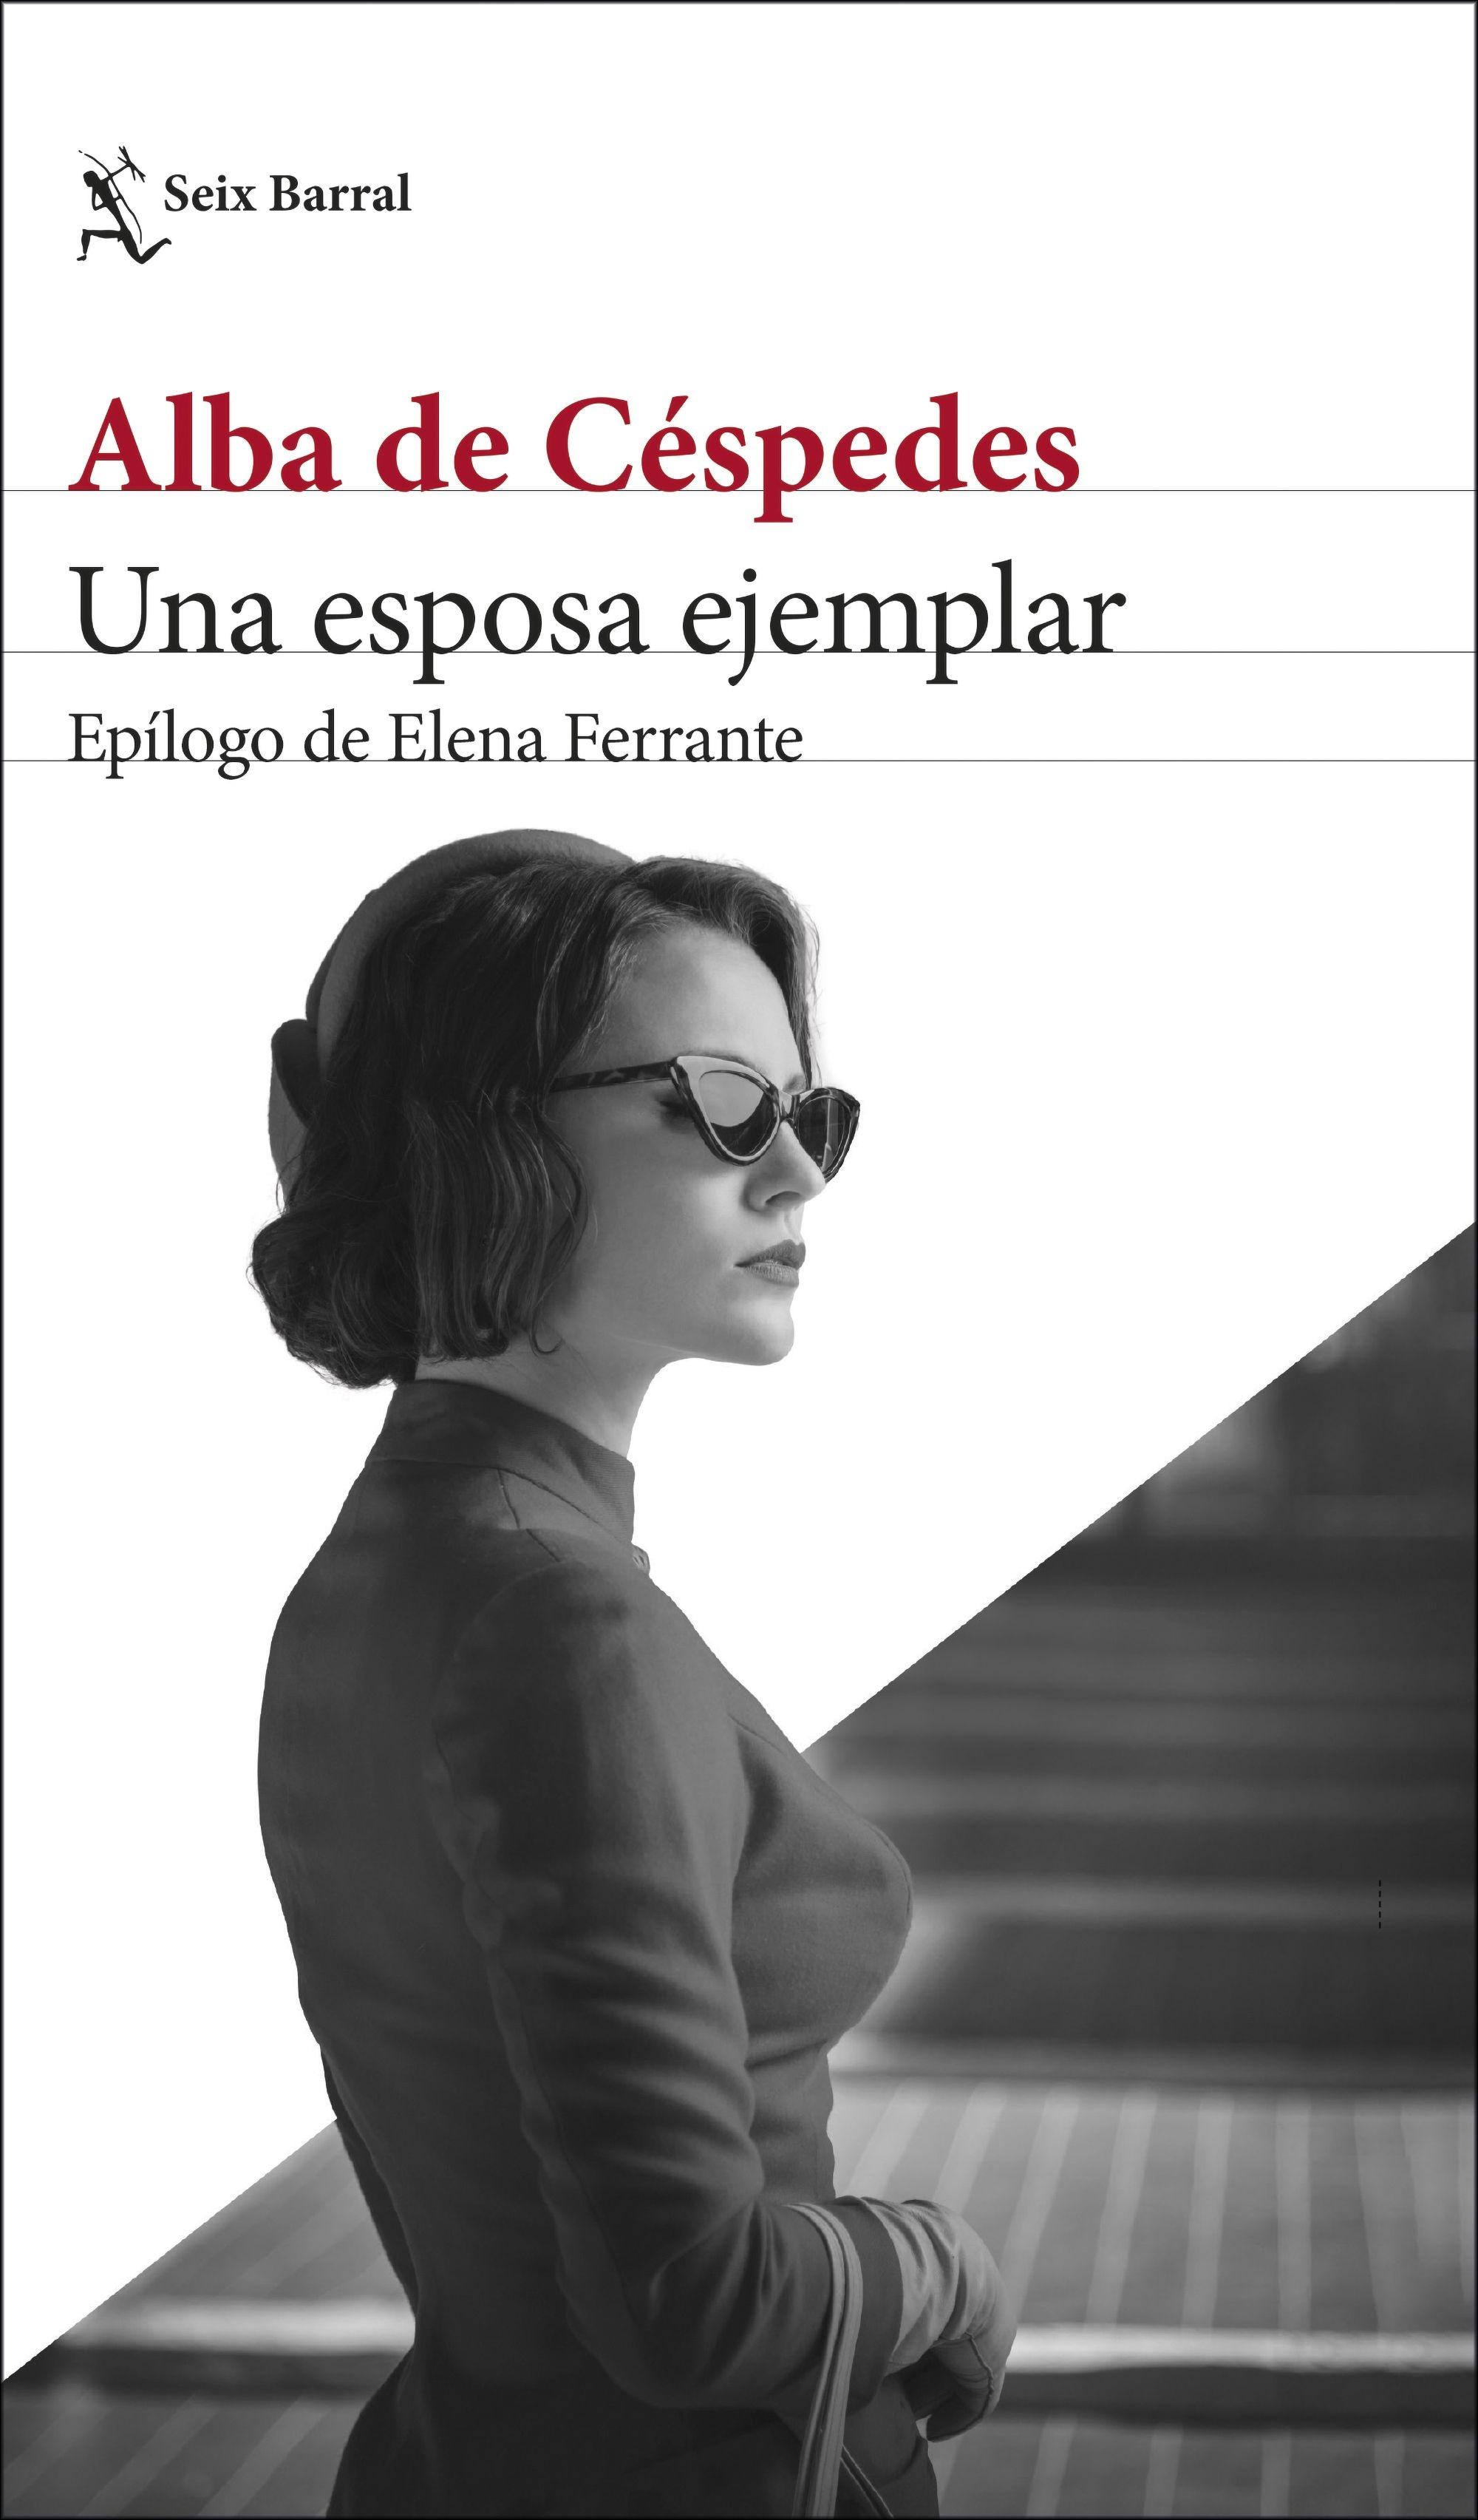 Una Esposa Ejemplar "Epílogo de Elena Ferrante". 